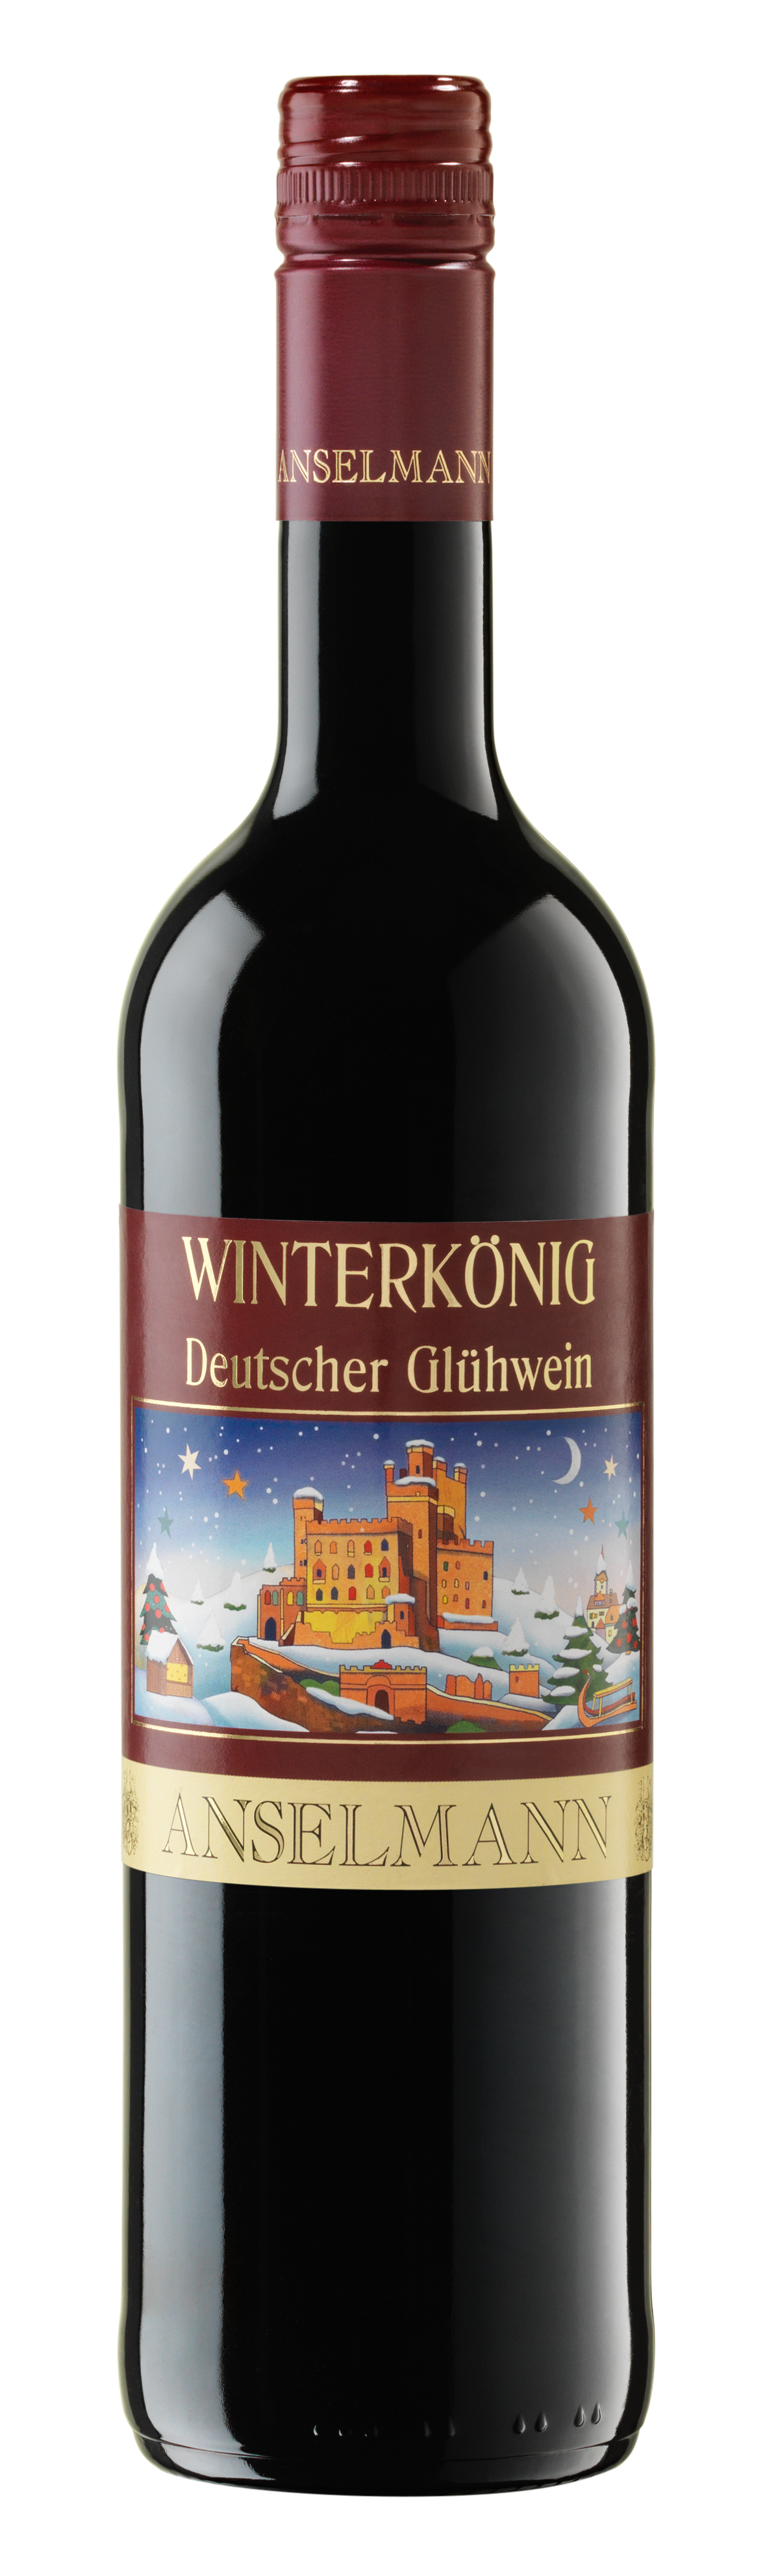 Winterkönig Glühwein aus Dornfelder 0,75 L - Weingut Anselmann